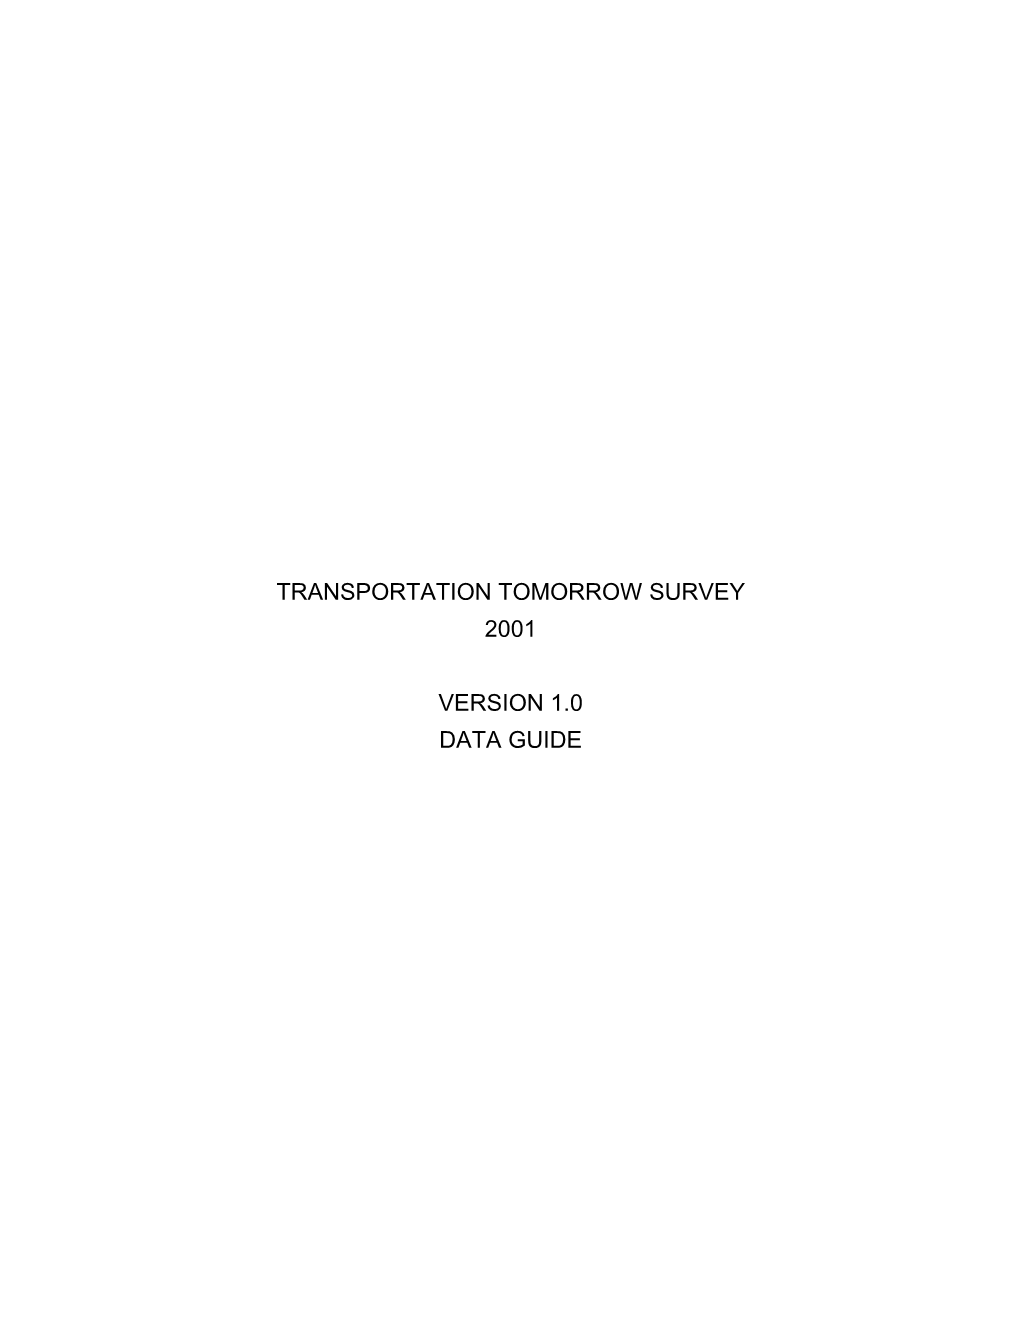 Transportation Tomorrow Survey 2001 Version 1.0 Data